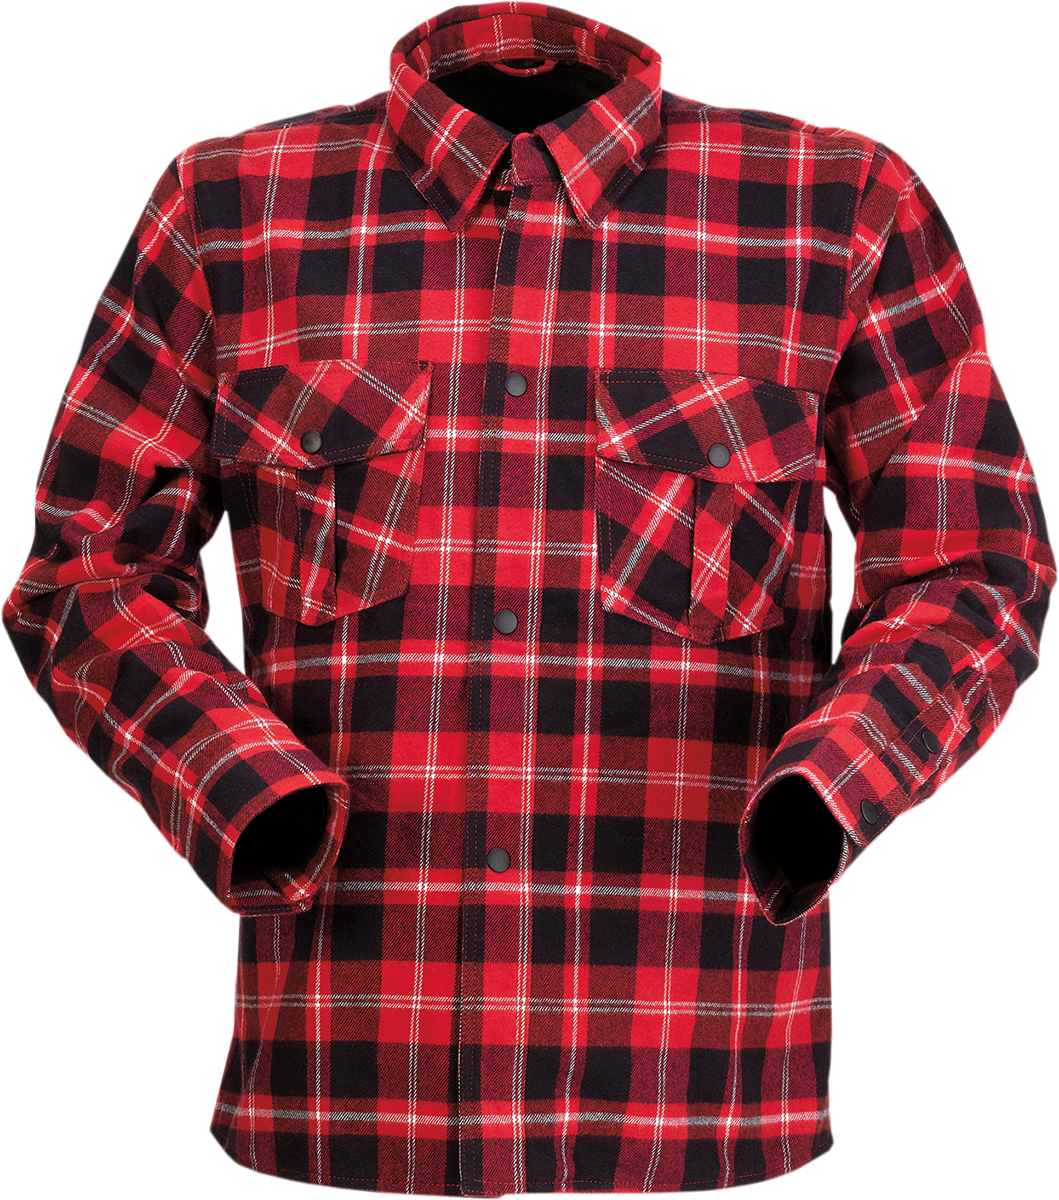 Z1R Duke Plaid Flannel Shirt - Red/Black - Medium 3040-3050